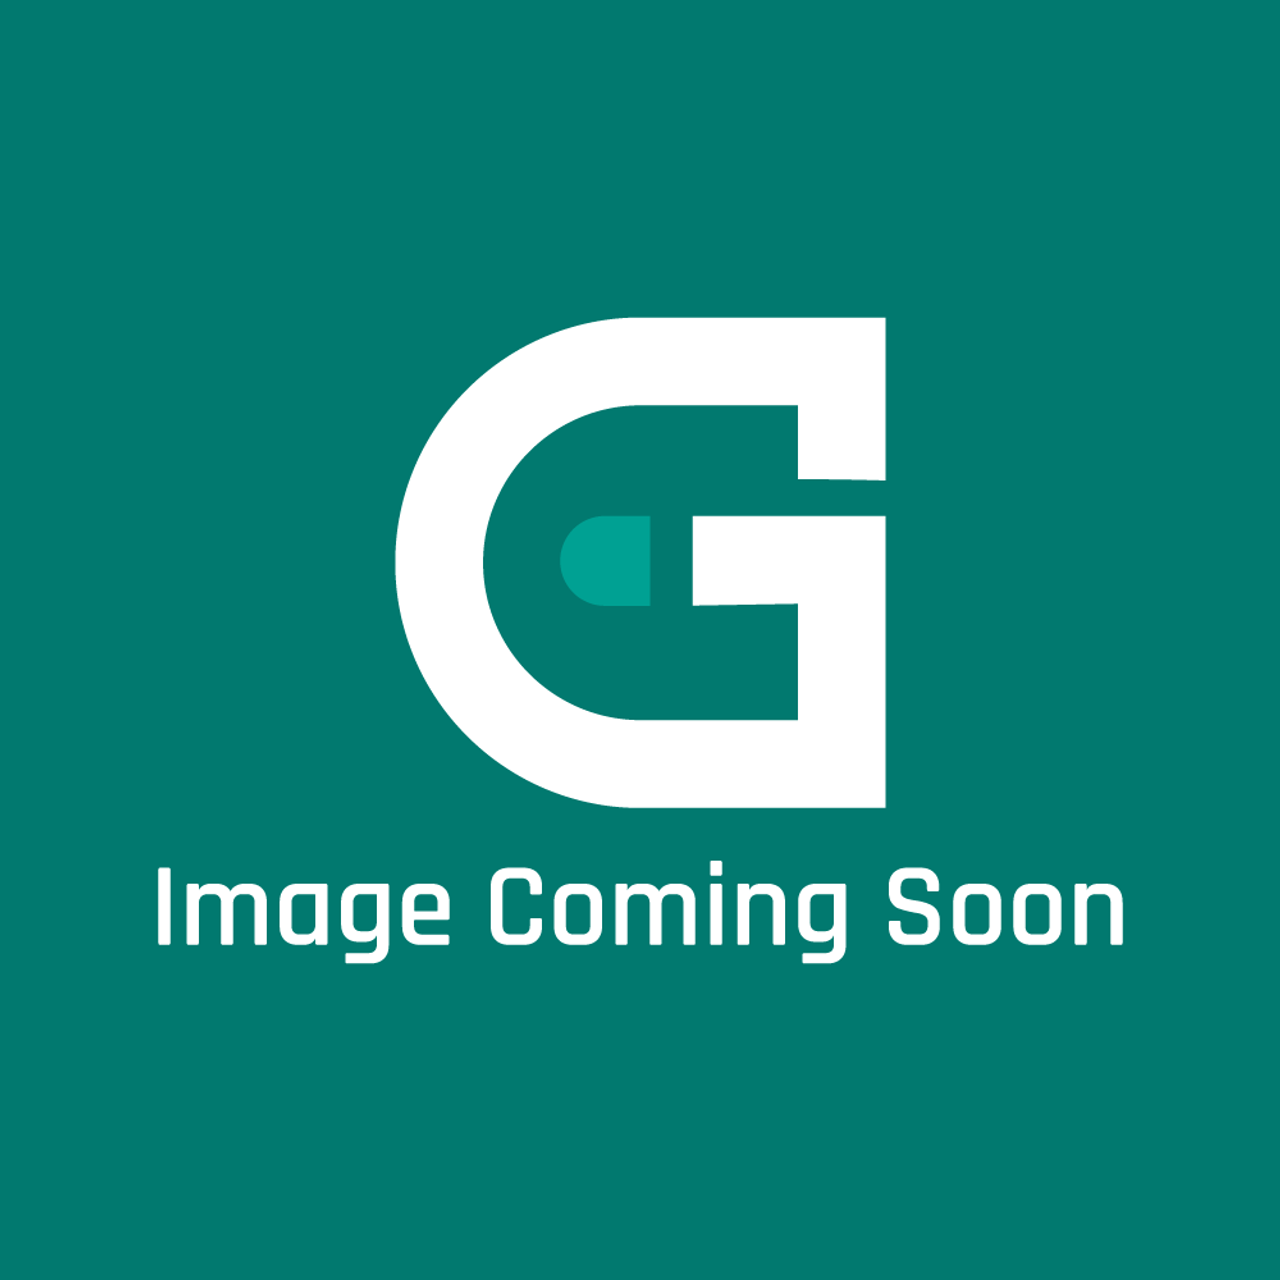 Viking G50012690 - BODY BURNER KIT (REAR BURNER) - Image Coming Soon!